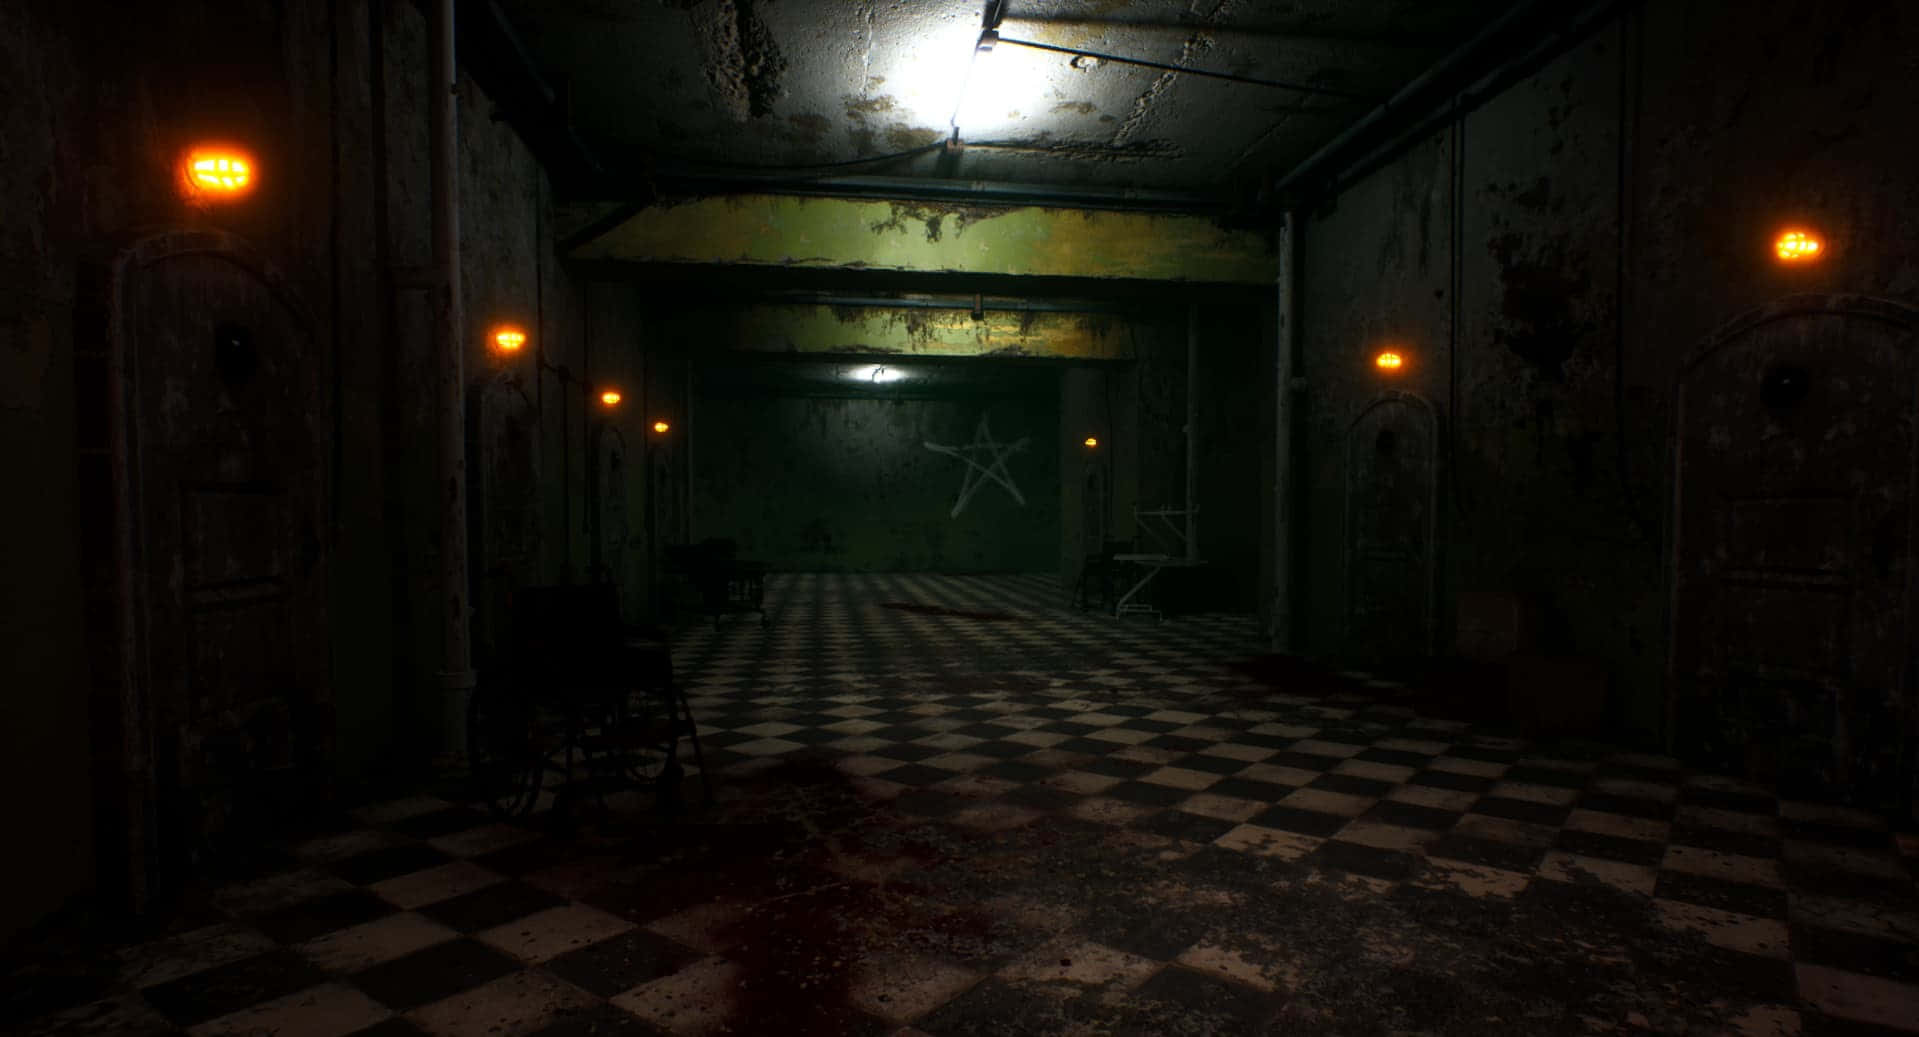 A Dark and Mysterious Hallway